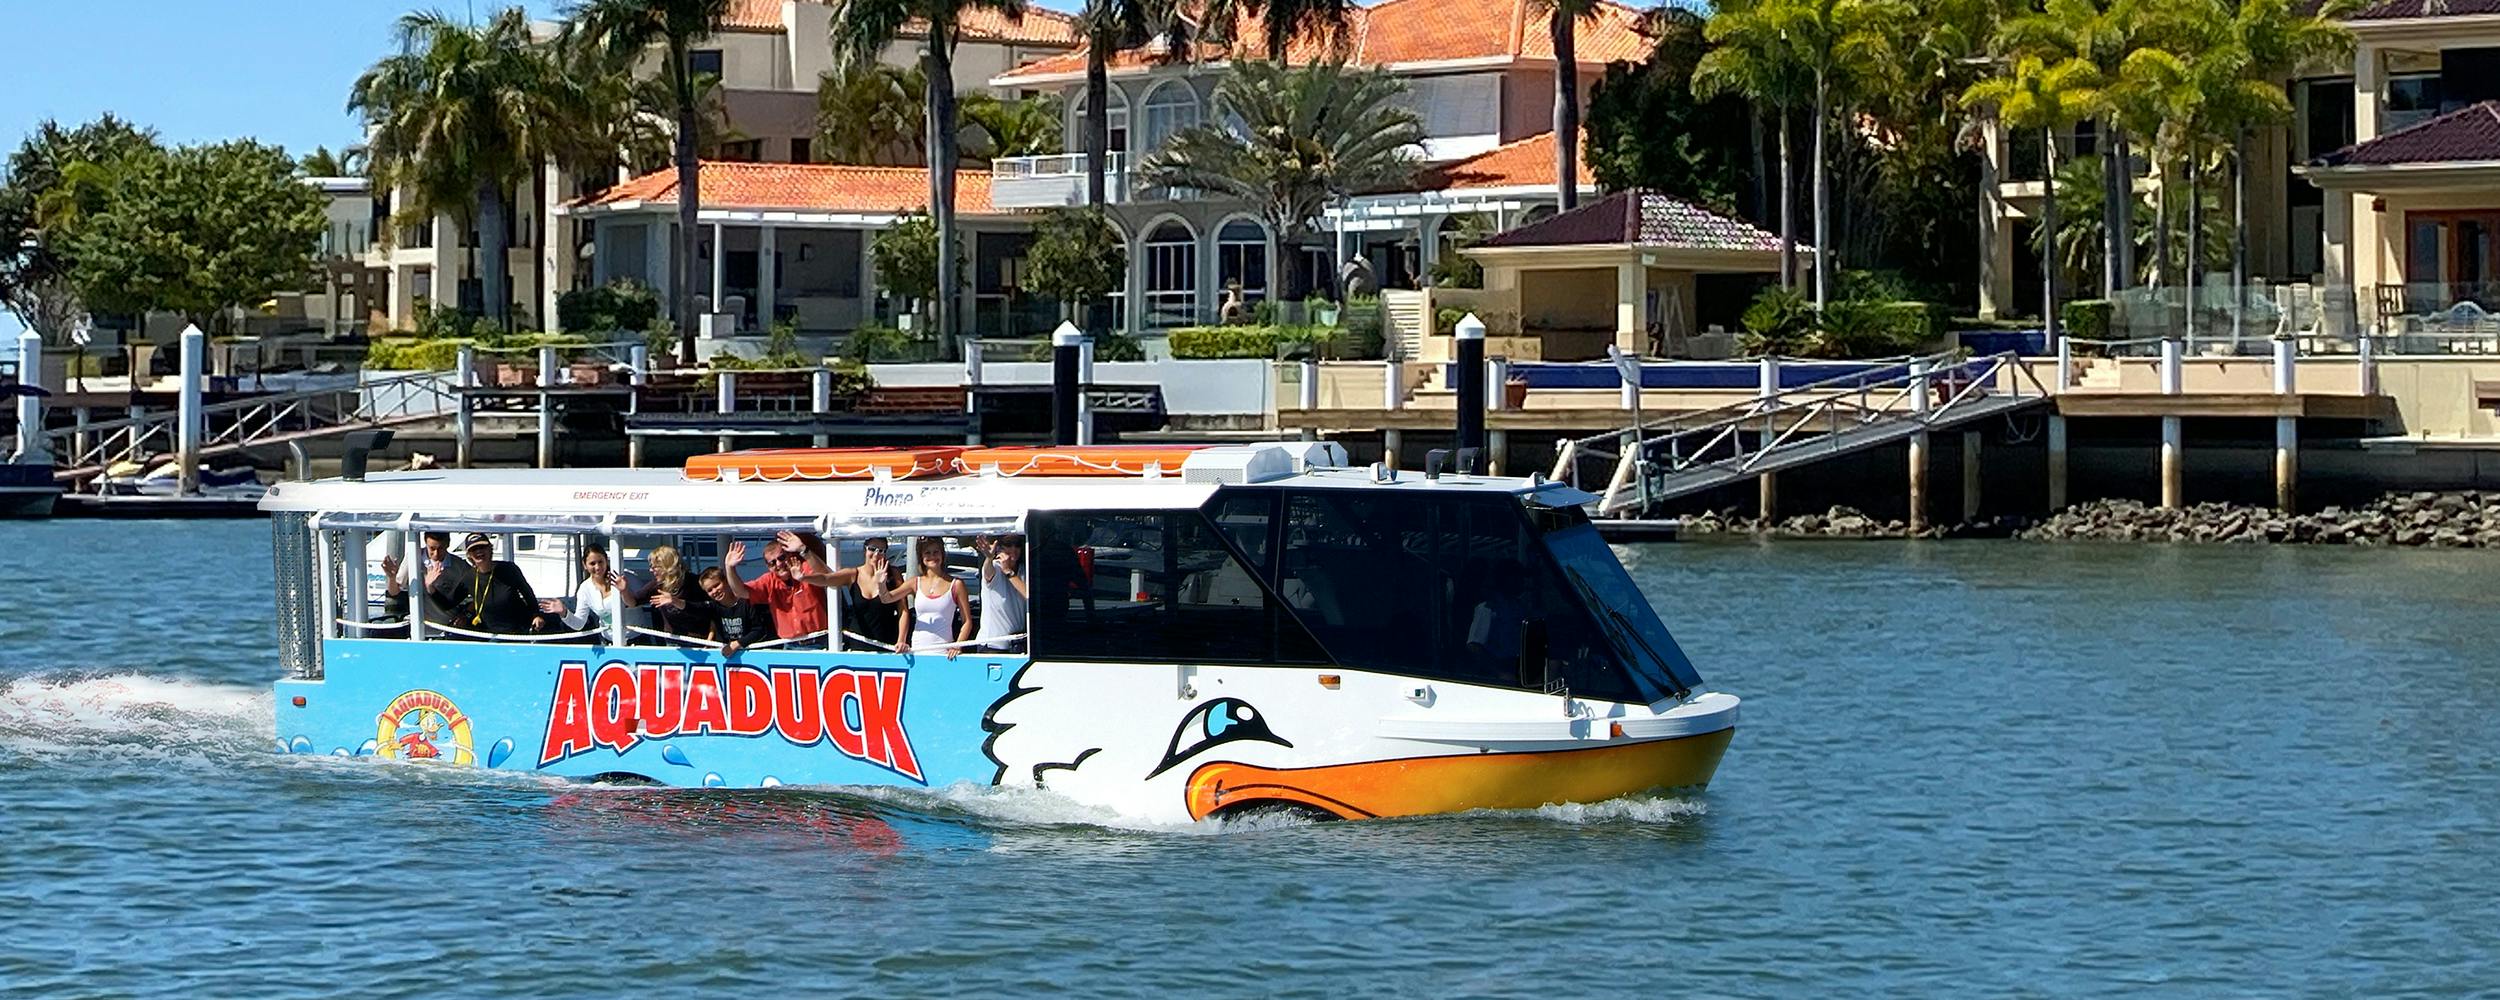 Aquaduck Sunshine Coast 1 Hour City Tour and River Cruise Musement